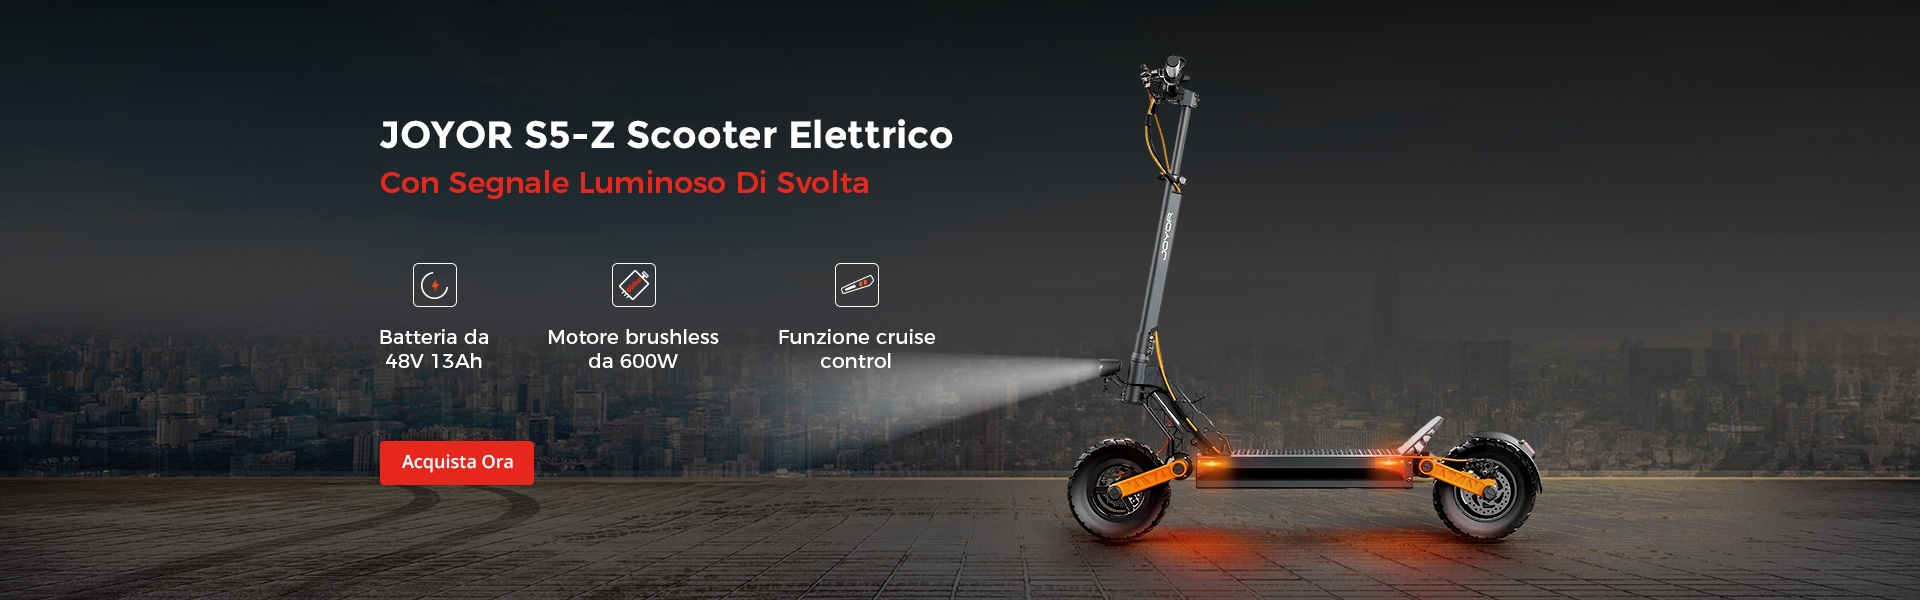 JOYOR S5-Z Scooter Elettrico